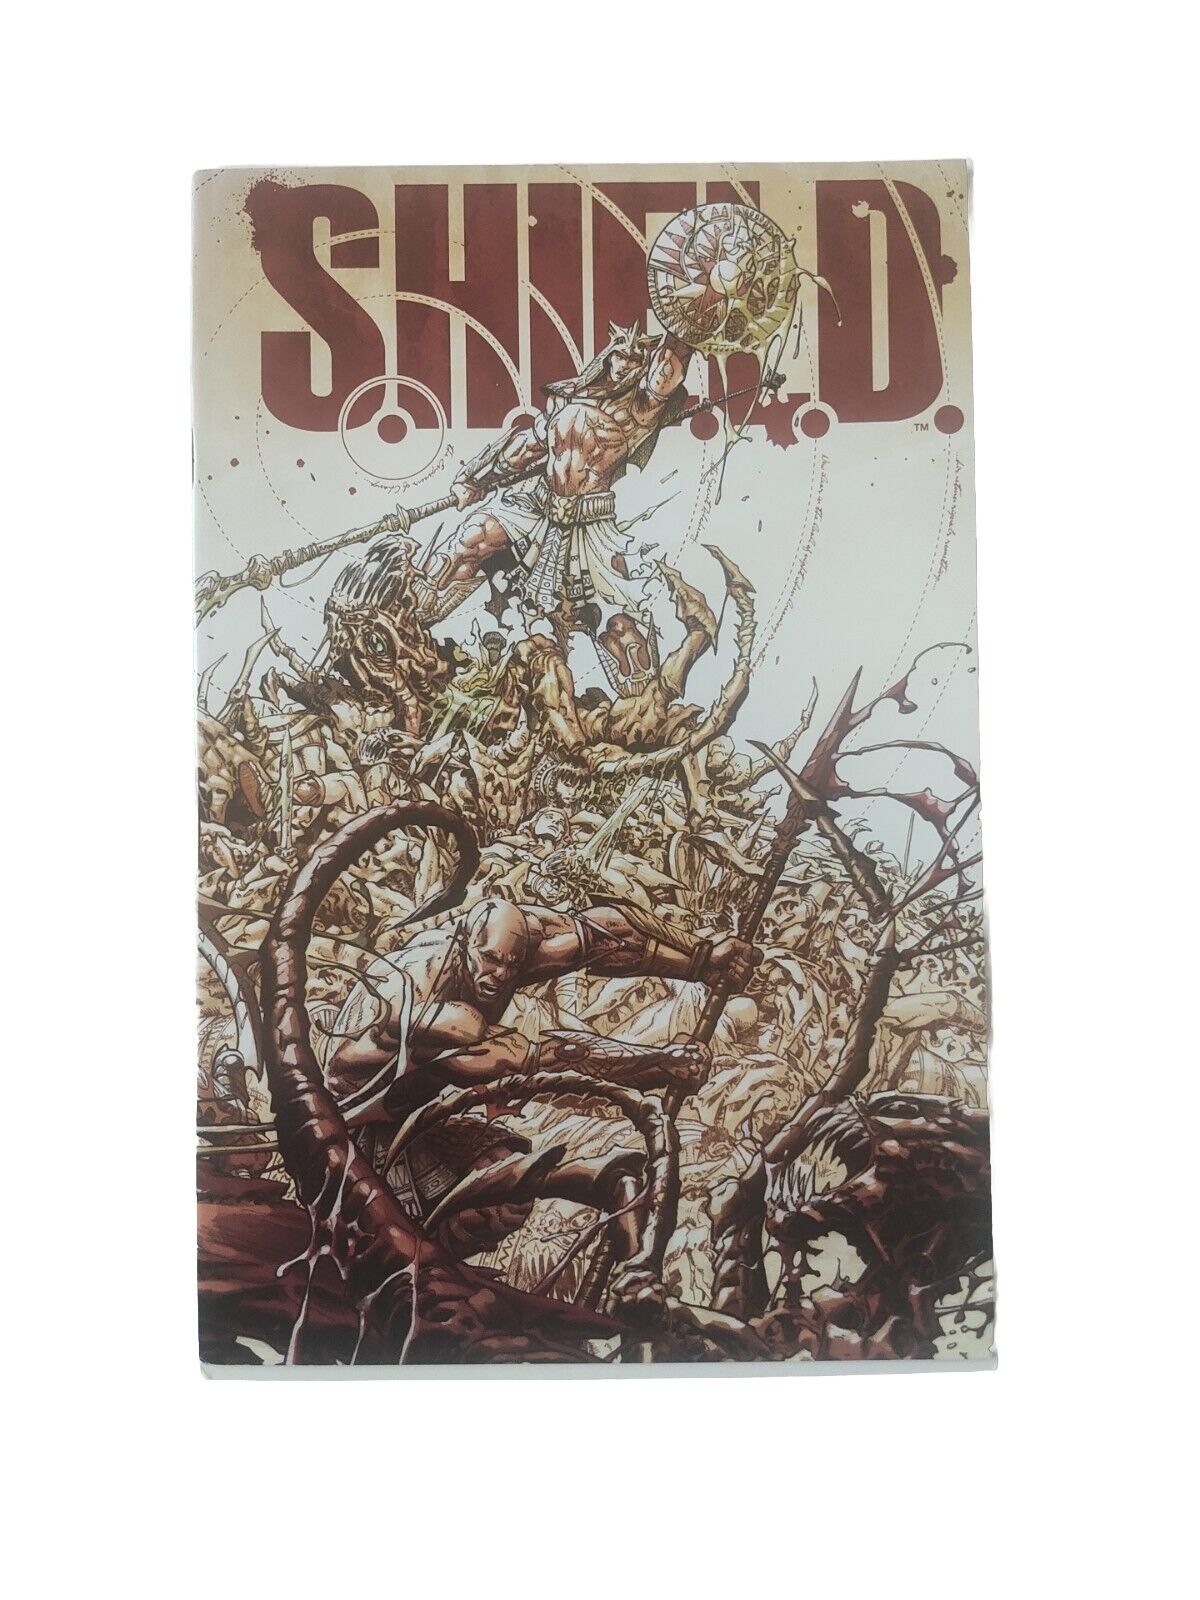 S.H.I.E.L.D. (2010) #1 - 2nd Print Variant